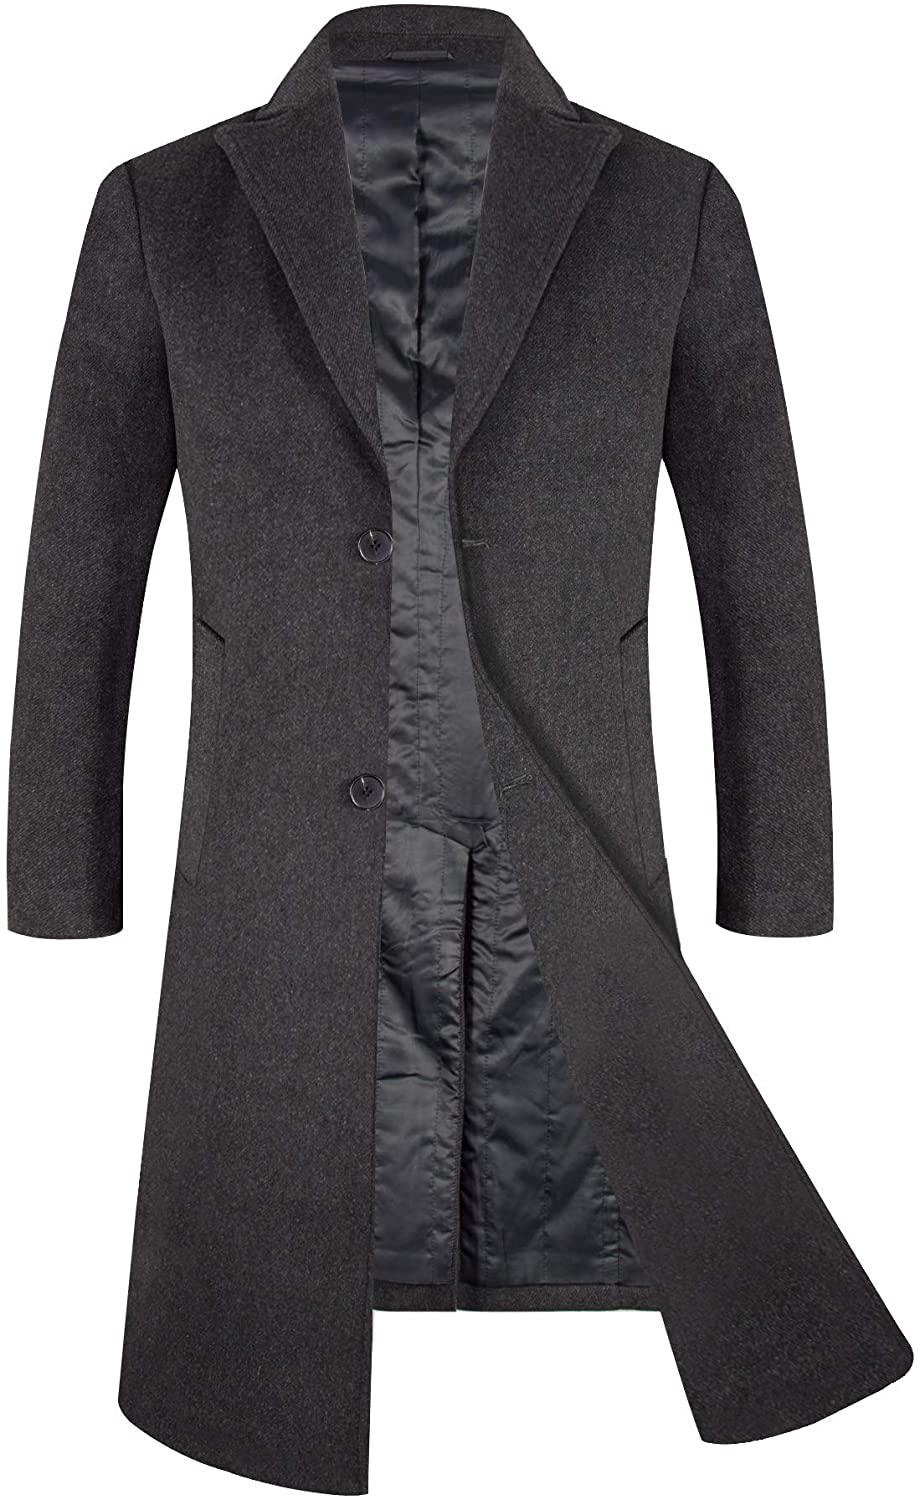 APTRO Men's Winter Slim Fit Wool Coat Single Breasted Wool Trench Coats